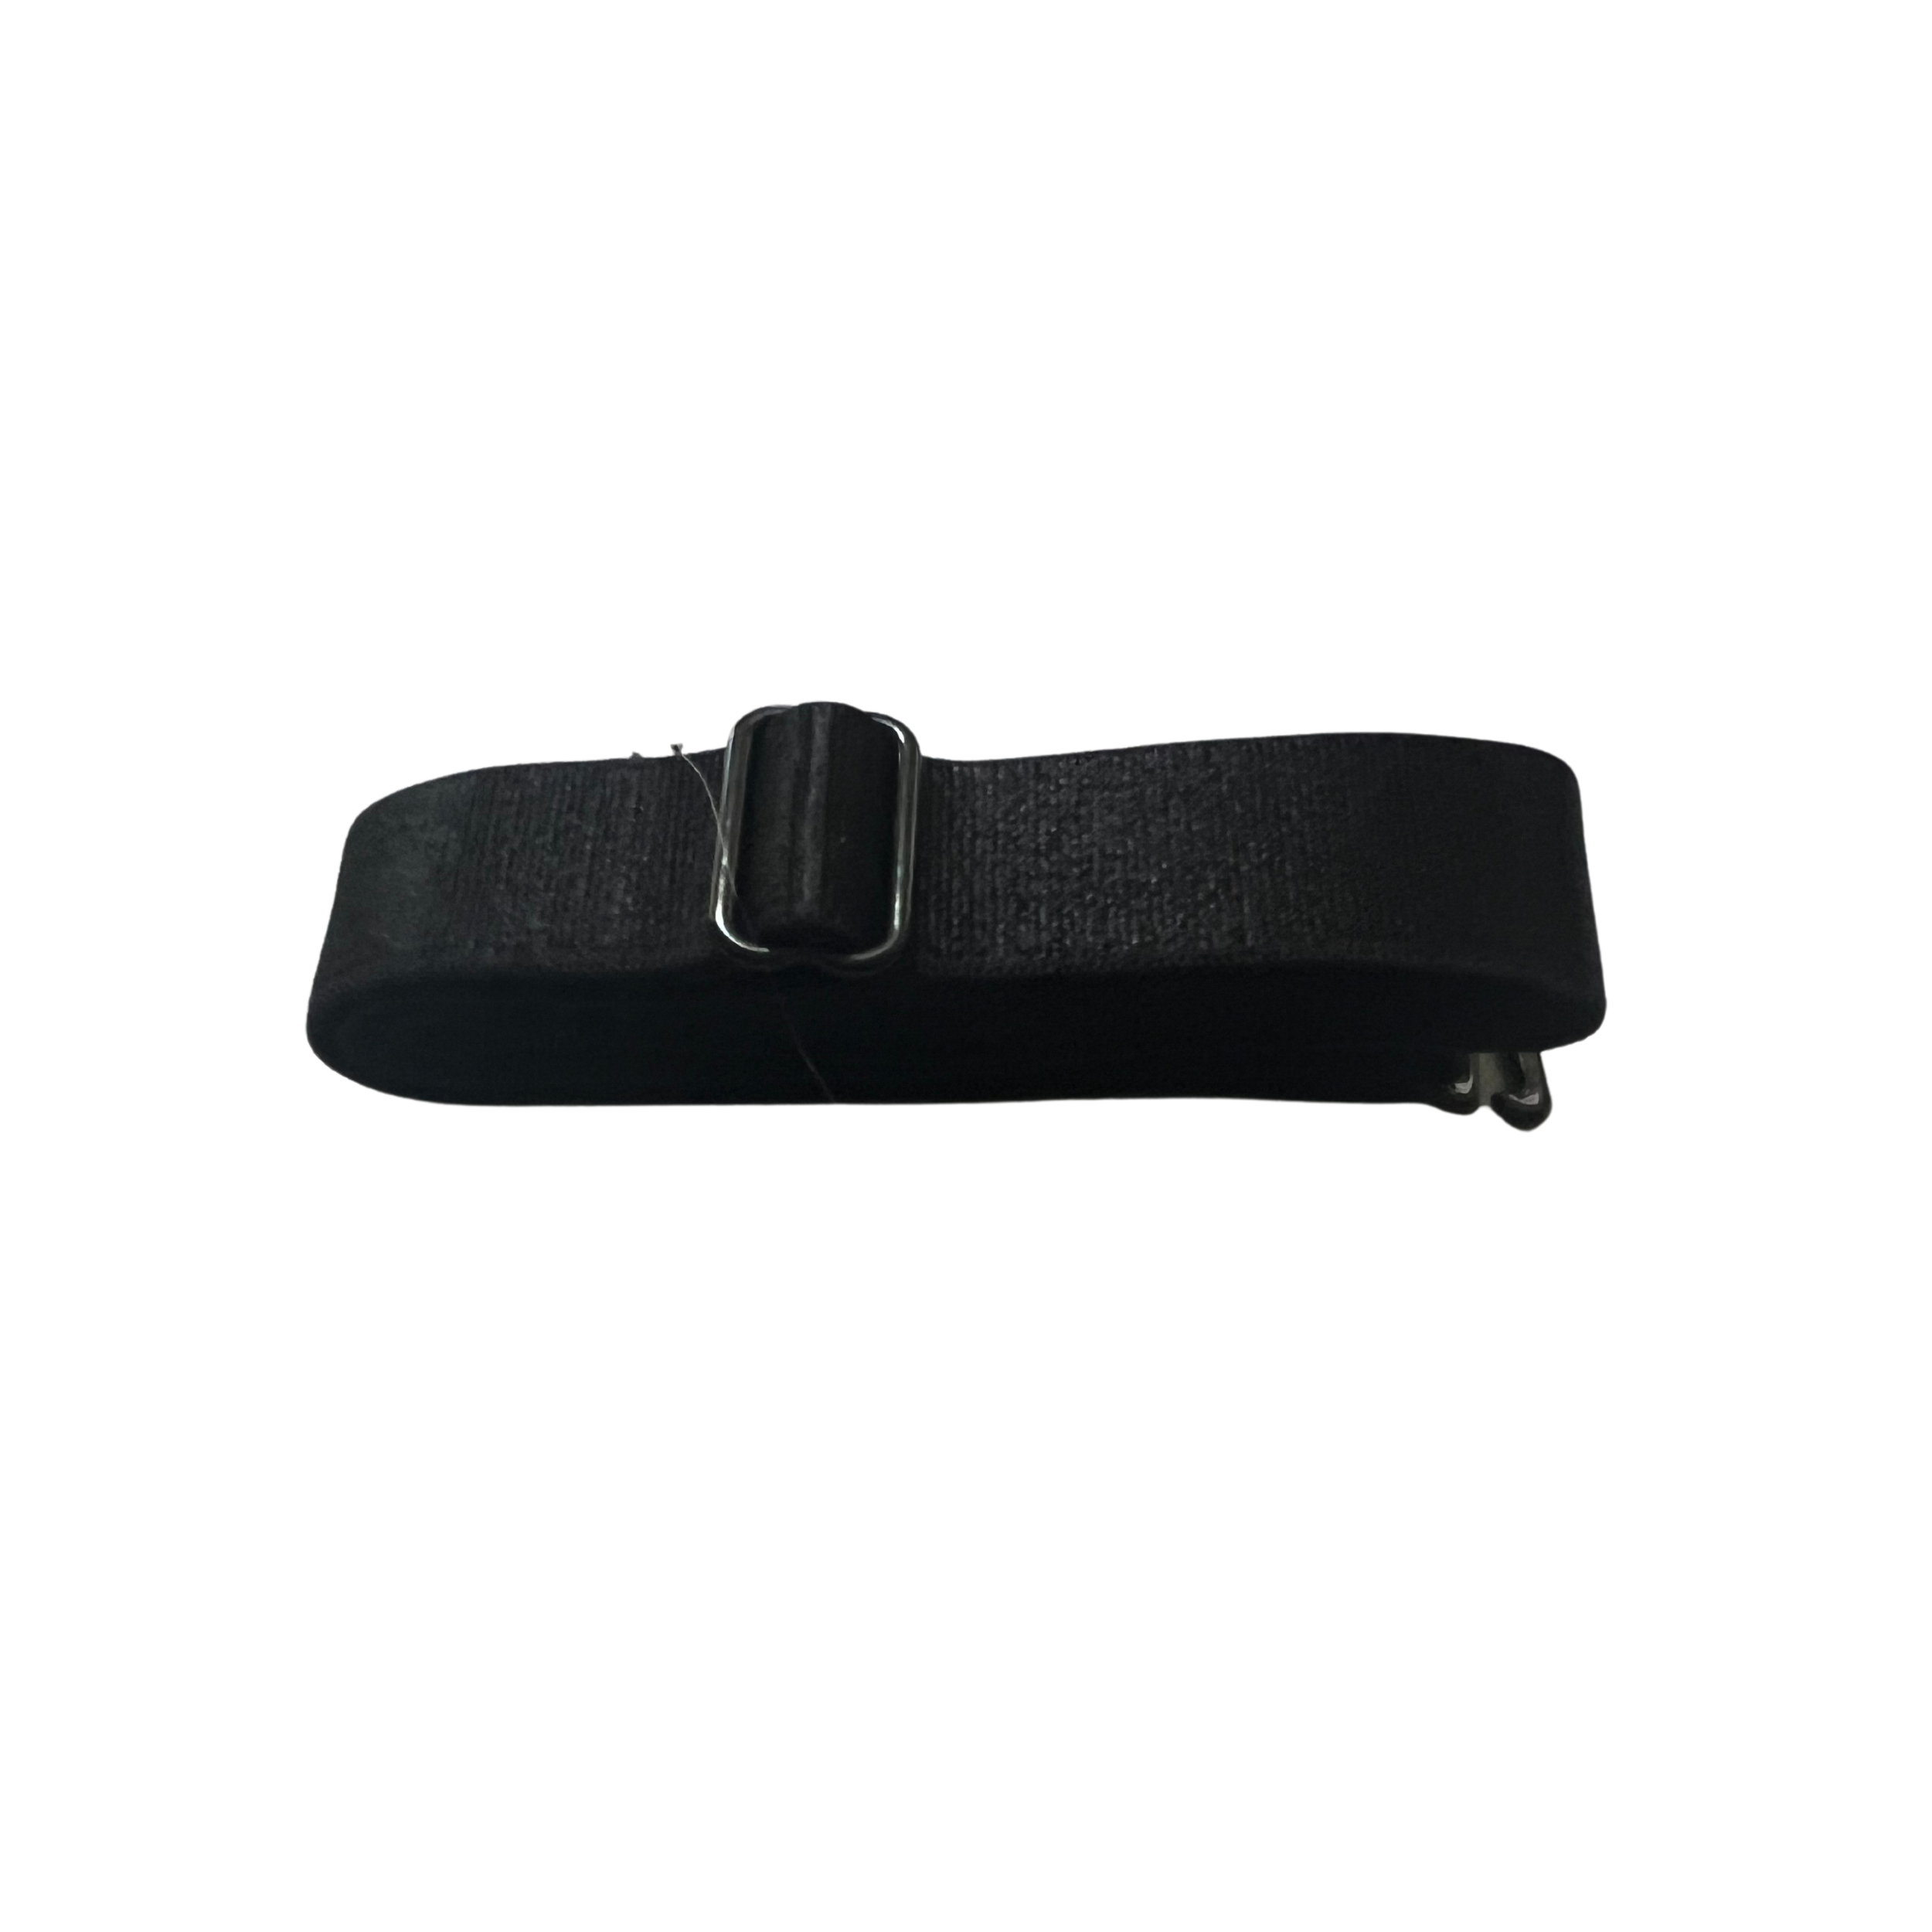 Essential Adjustable Bra Strap Clip in Black & Buff